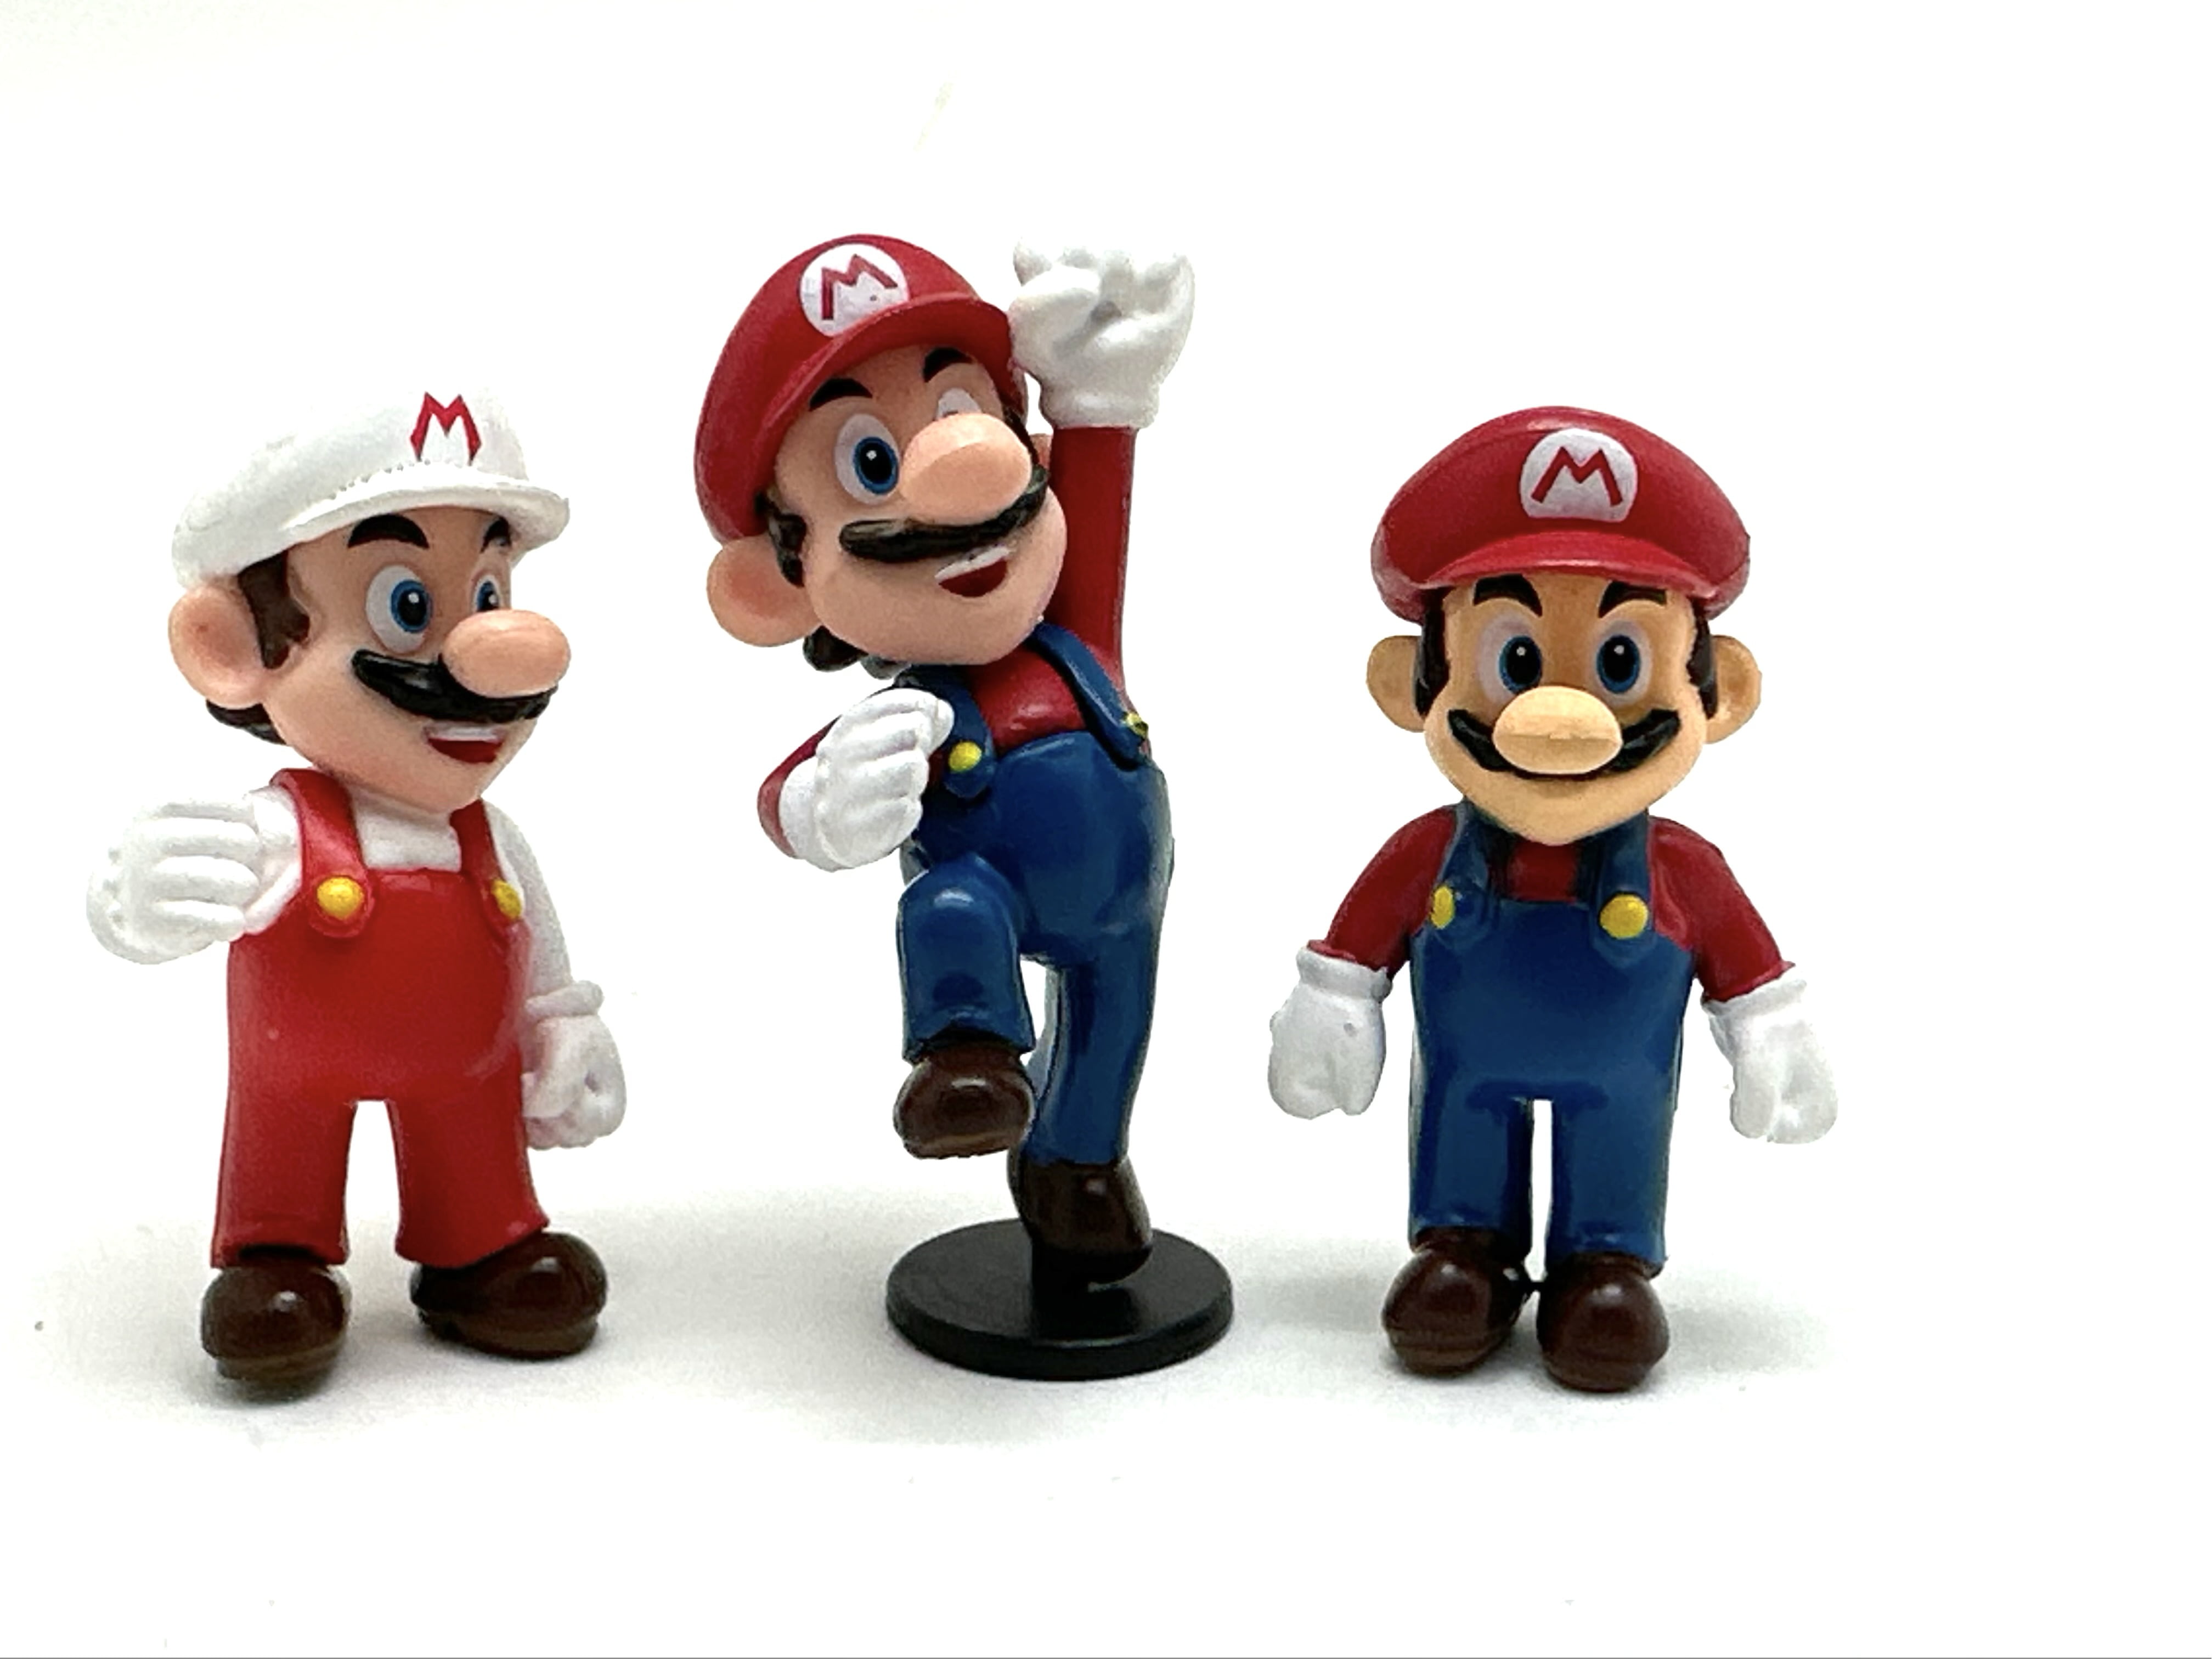 Super Mario and Luigi Toys, Garage kit, Character Model Set, 3 Pieces, 5  Mario Luigi, Gisi， Brothers